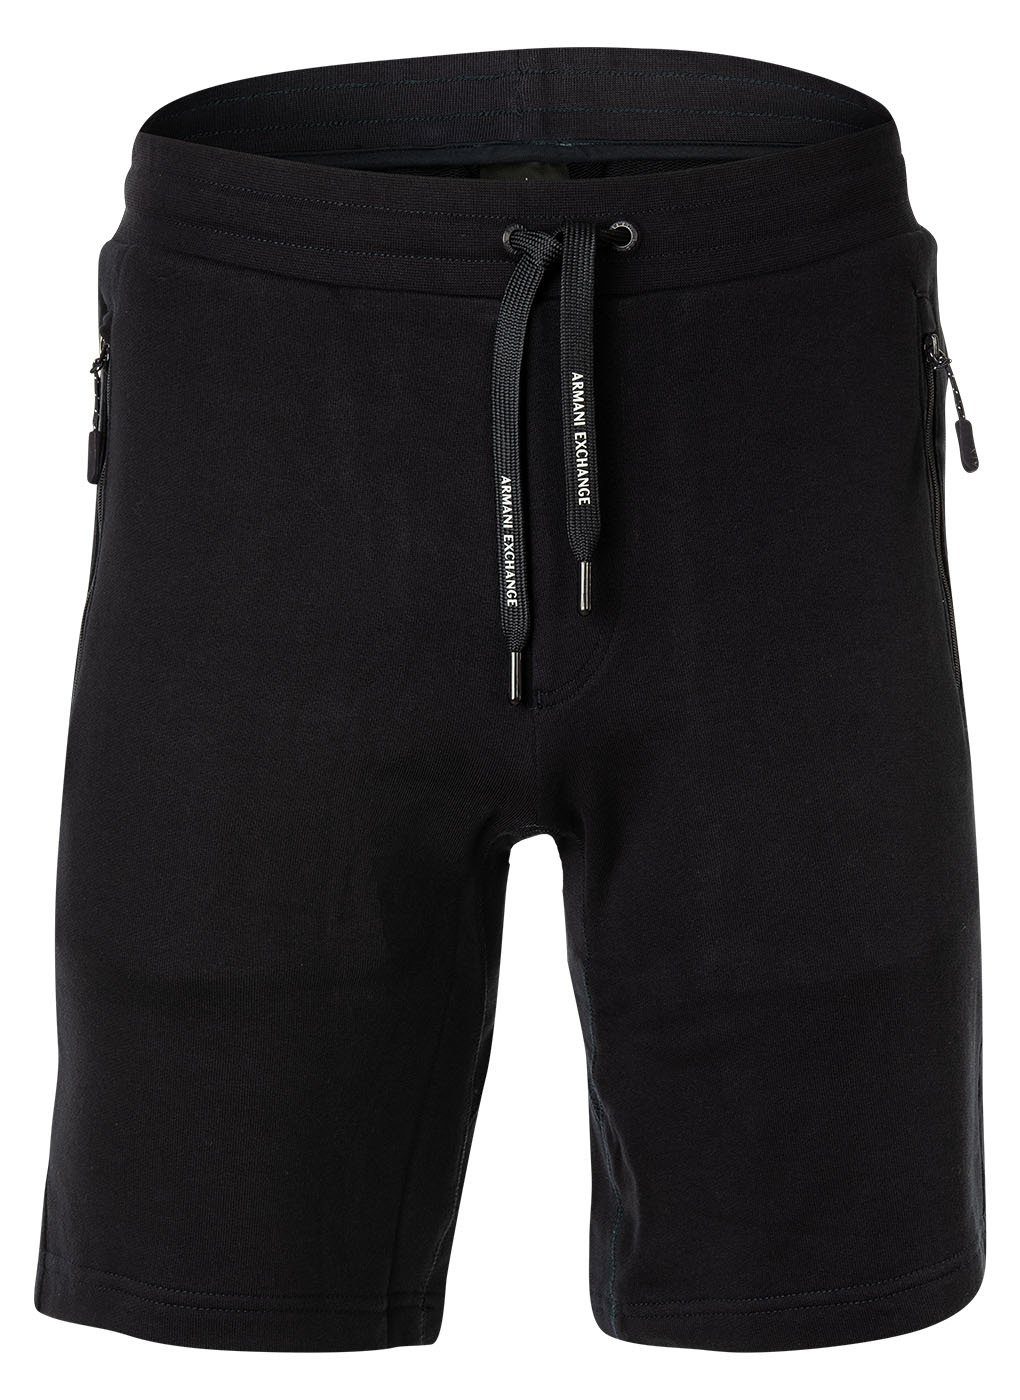 ARMANI EXCHANGE Sweatshorts Herren Jogginghose - Loungewear Pants, kurz Marine